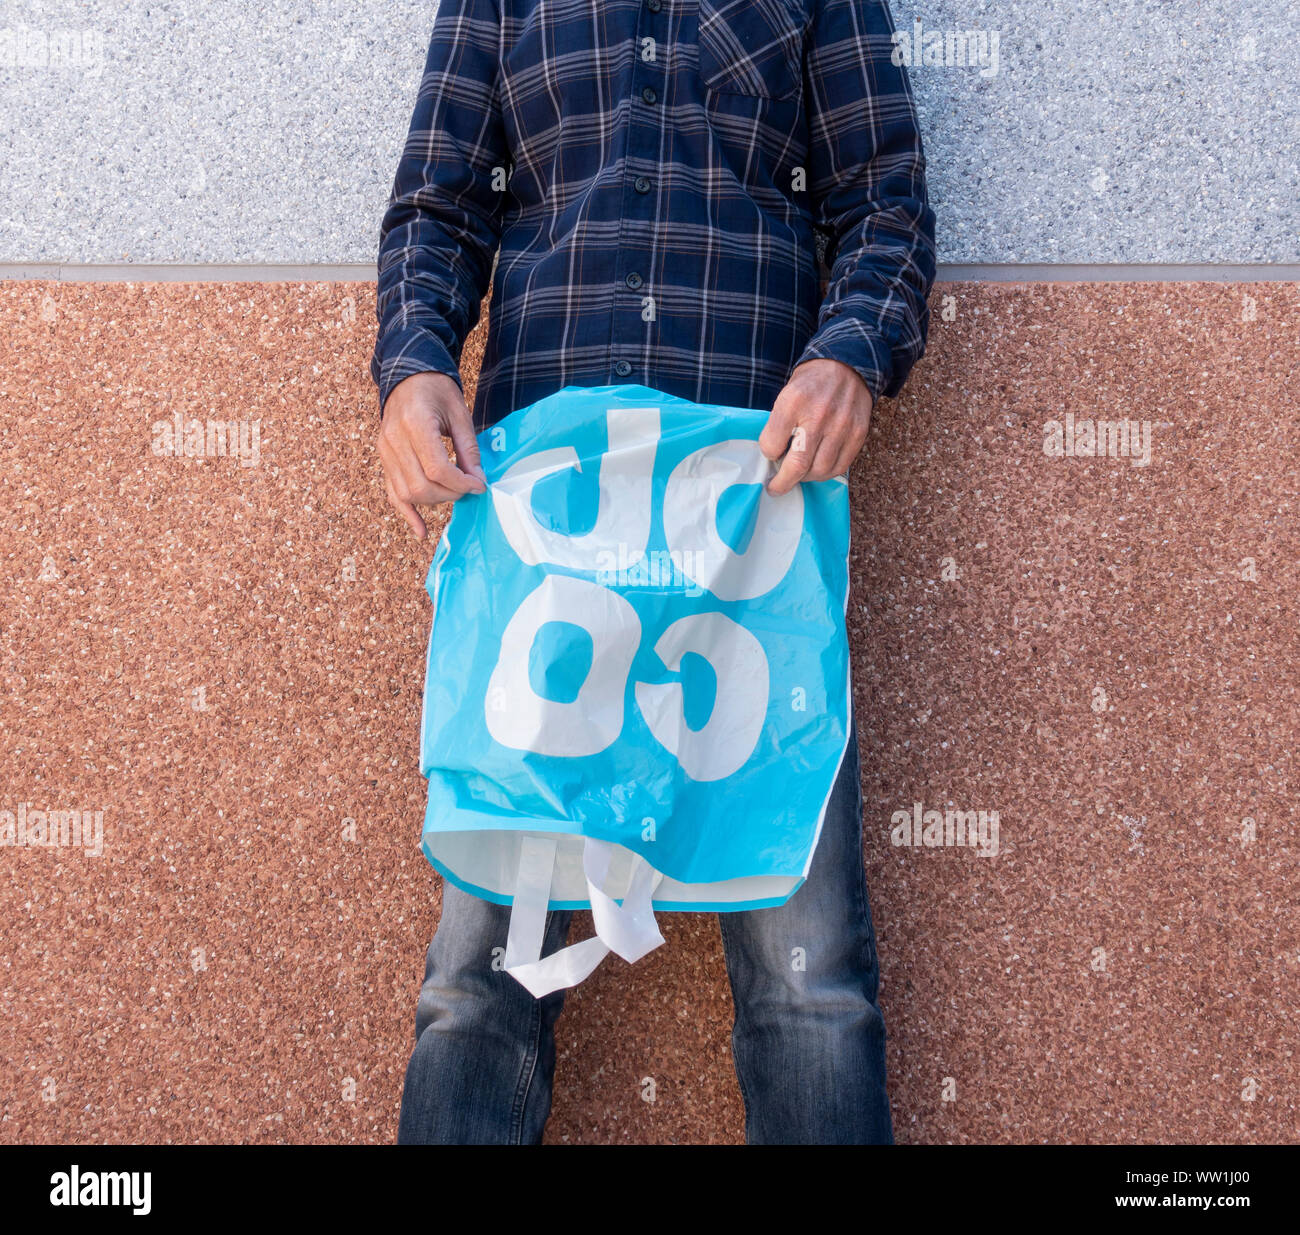 Man holding empty Coop supermarket plastic shopping bag. UK Stock Photo